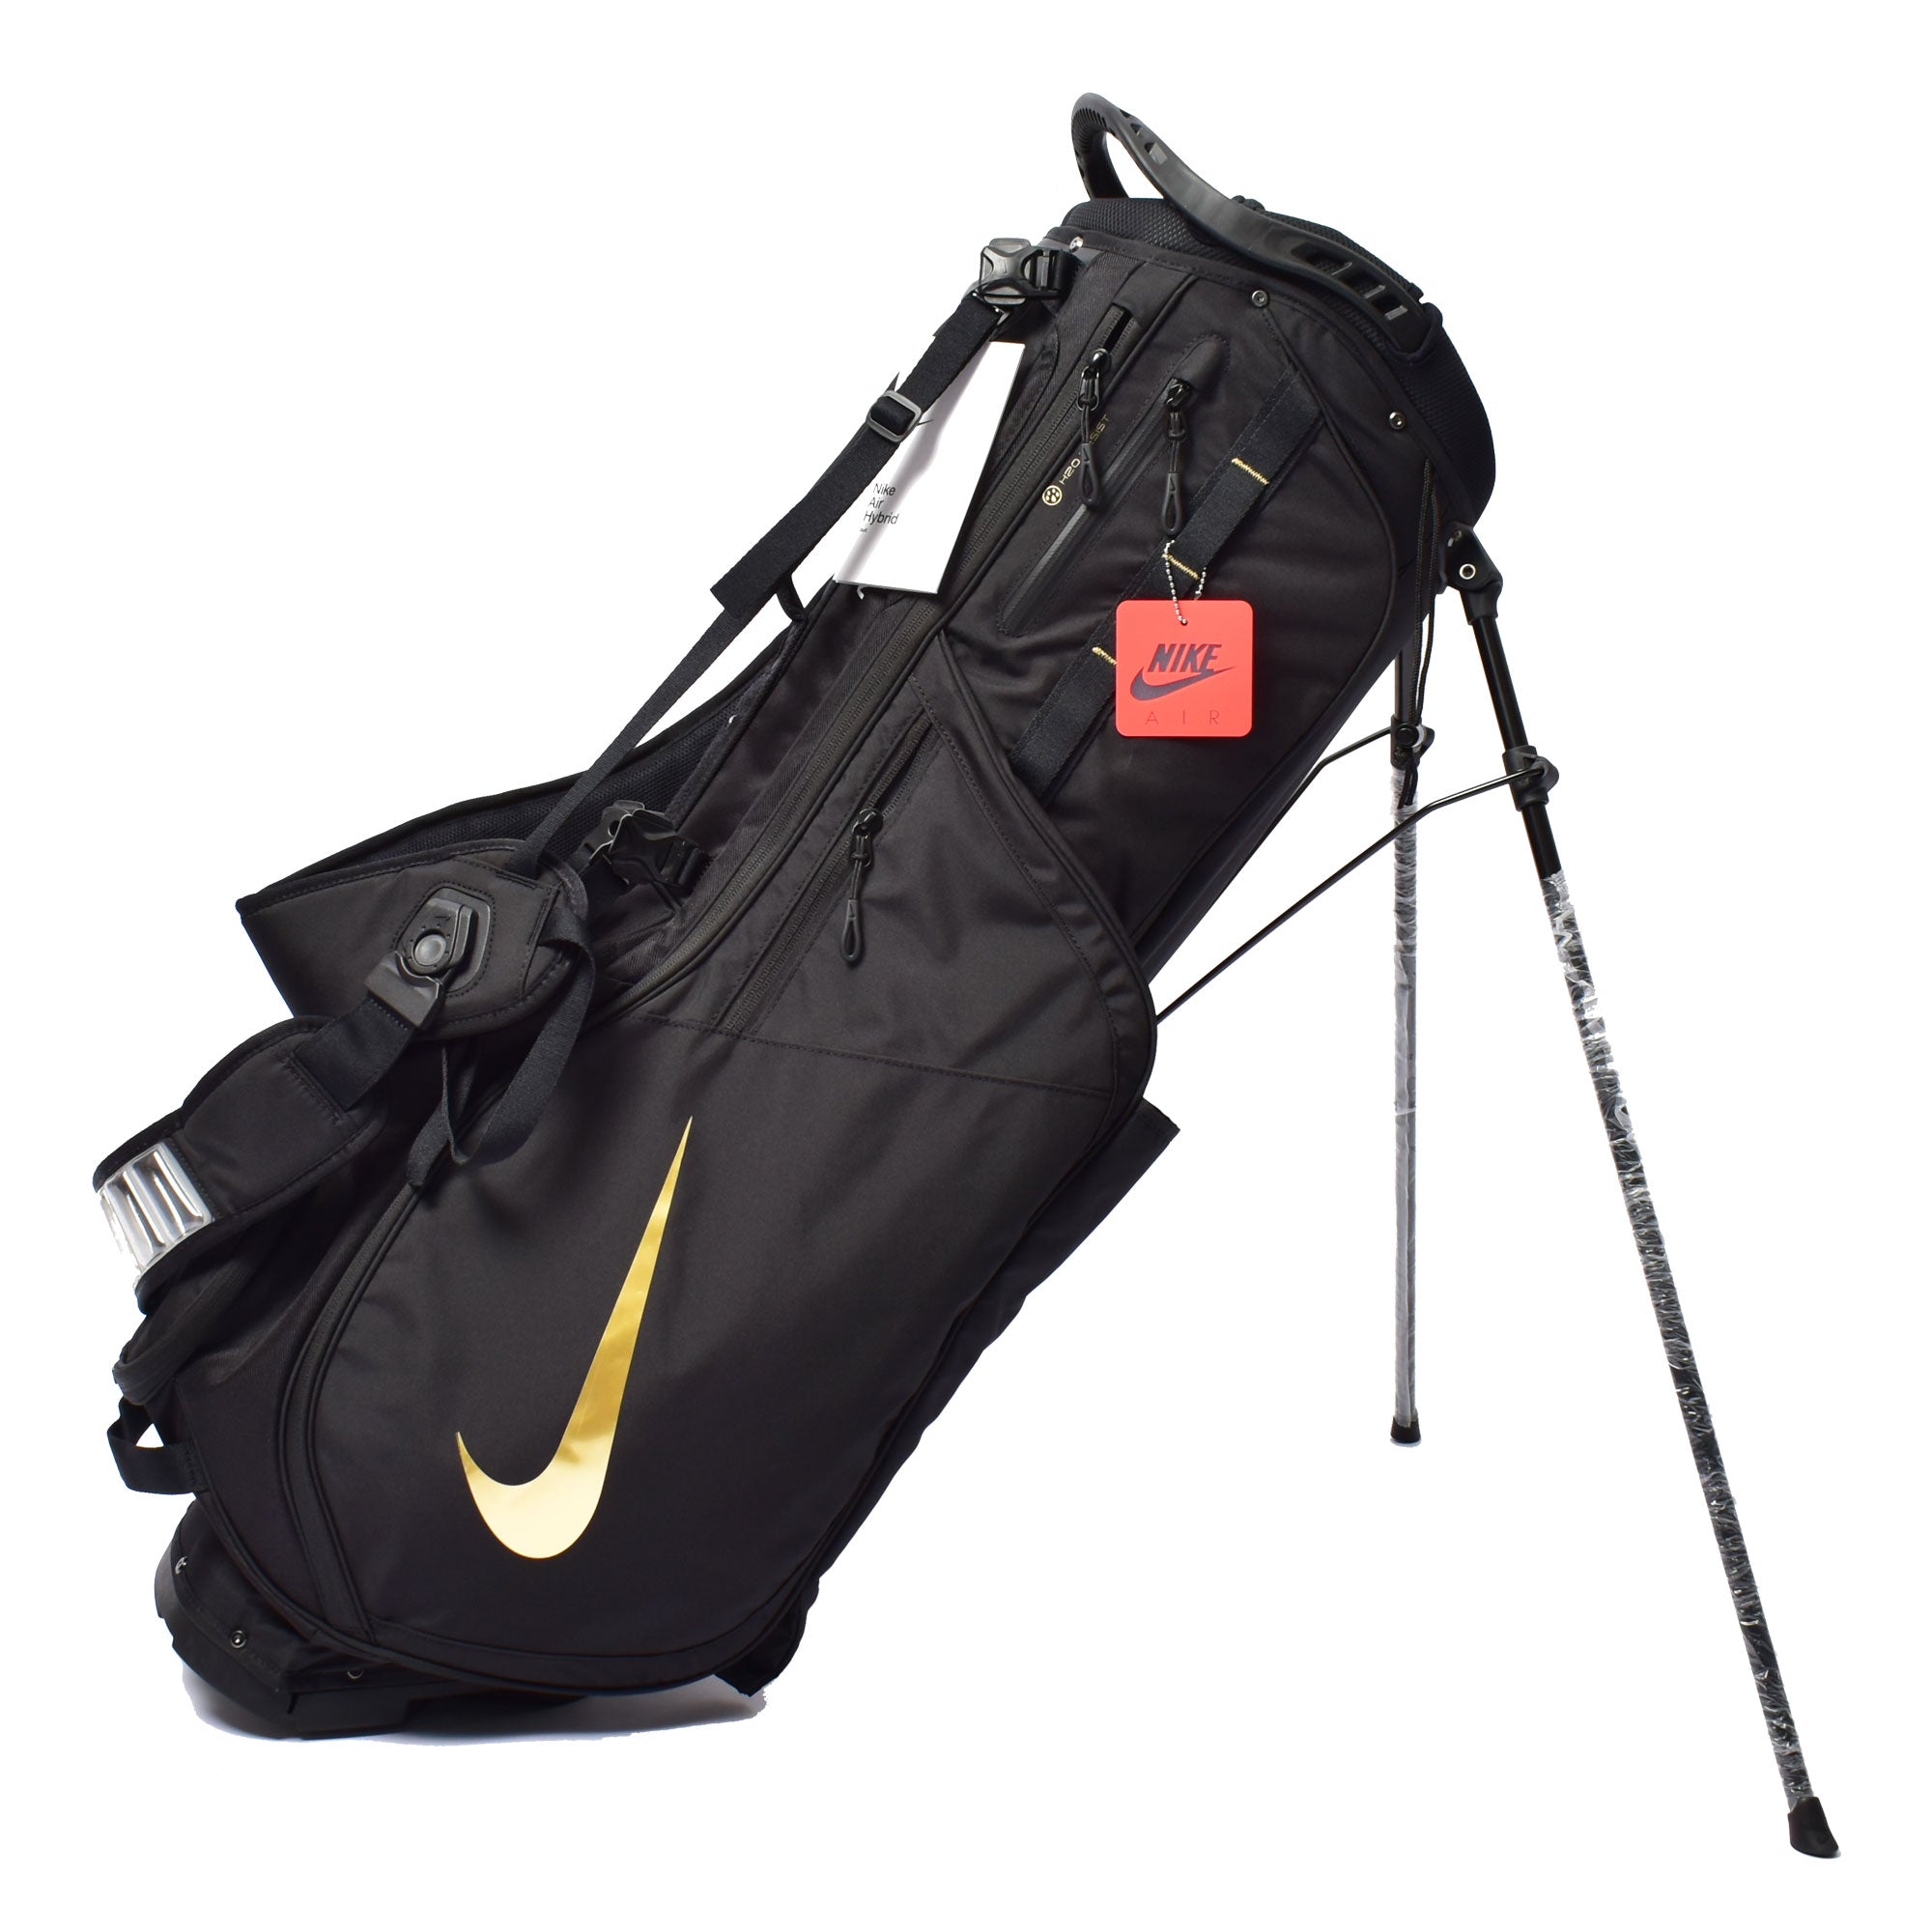 NIKE ゴルフバック BLACK 新品未使用品 - ゴルフバッグ・キャディバッグ